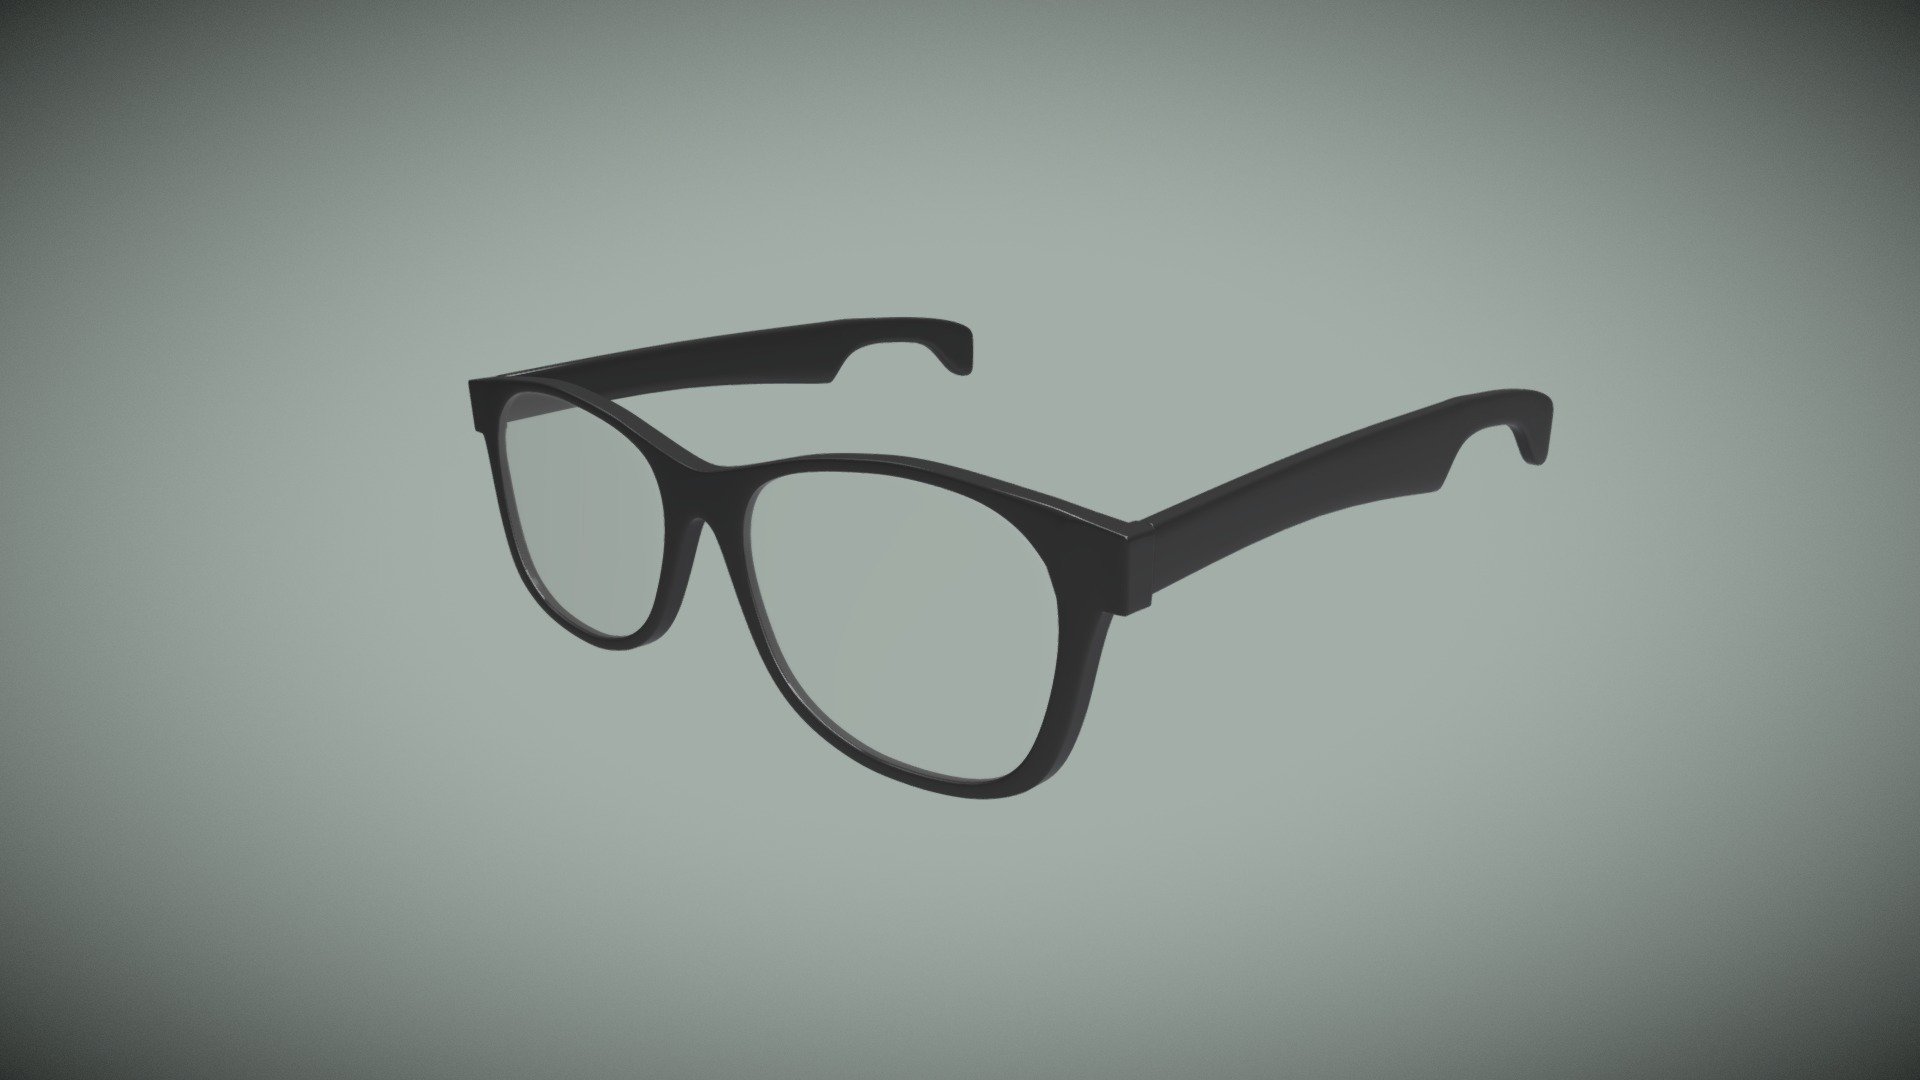 Glasses modeled in Blender 3D, Cycles Materials 3d model